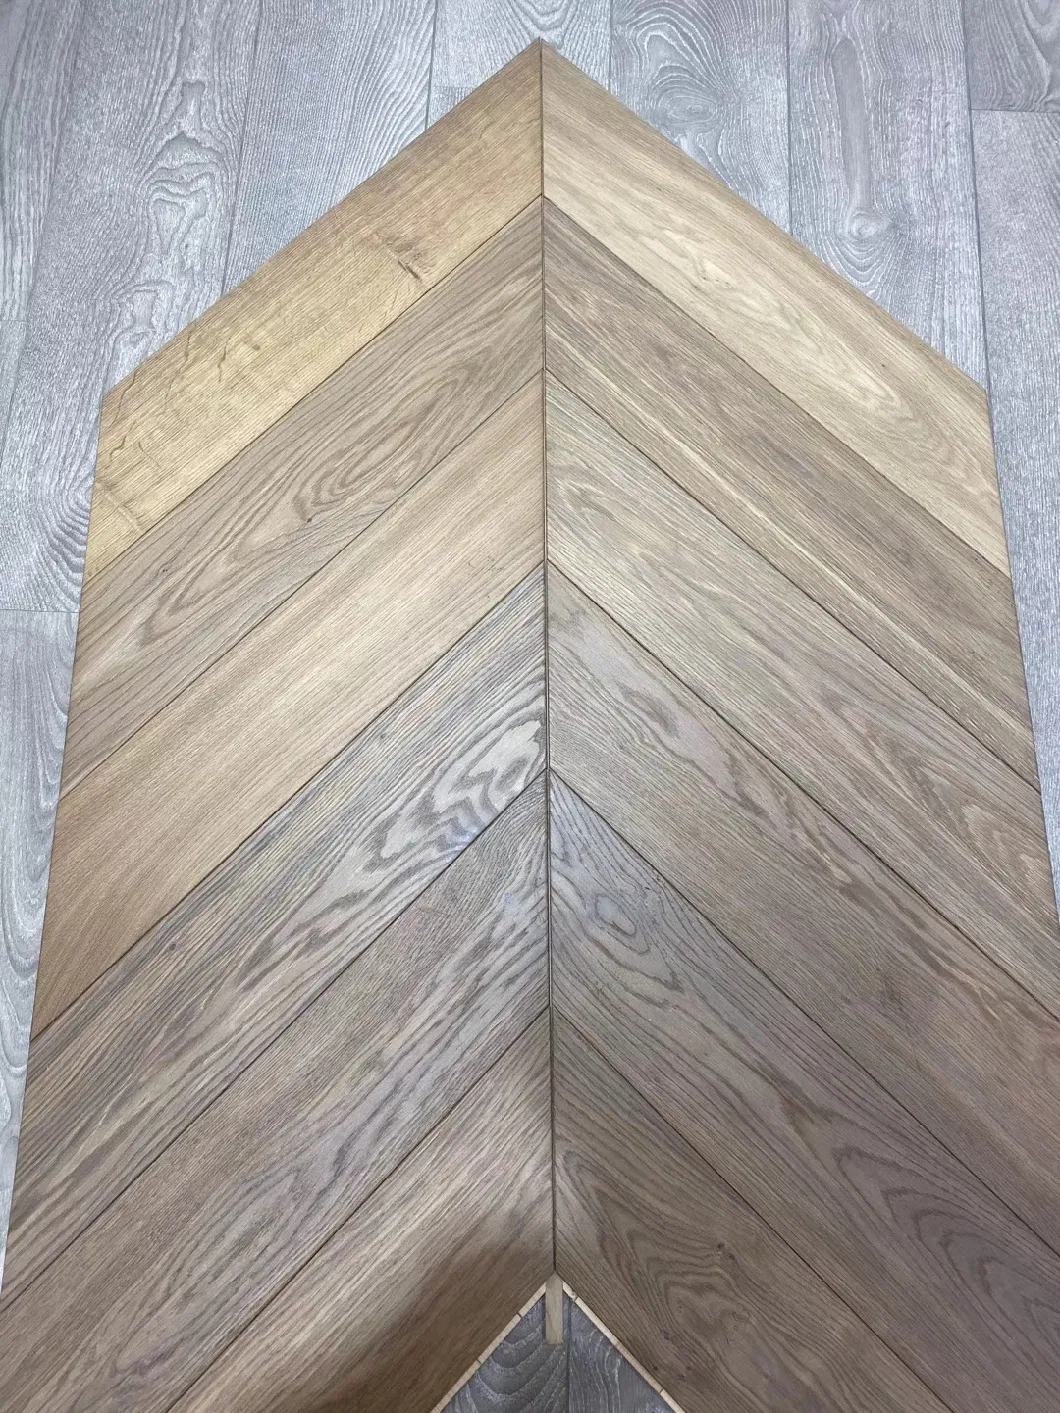 Hardwood Floor Multi-Layer Engineered Oak Solid Wood Marble Tile Parquet Flooring High Quality Brushed Floor